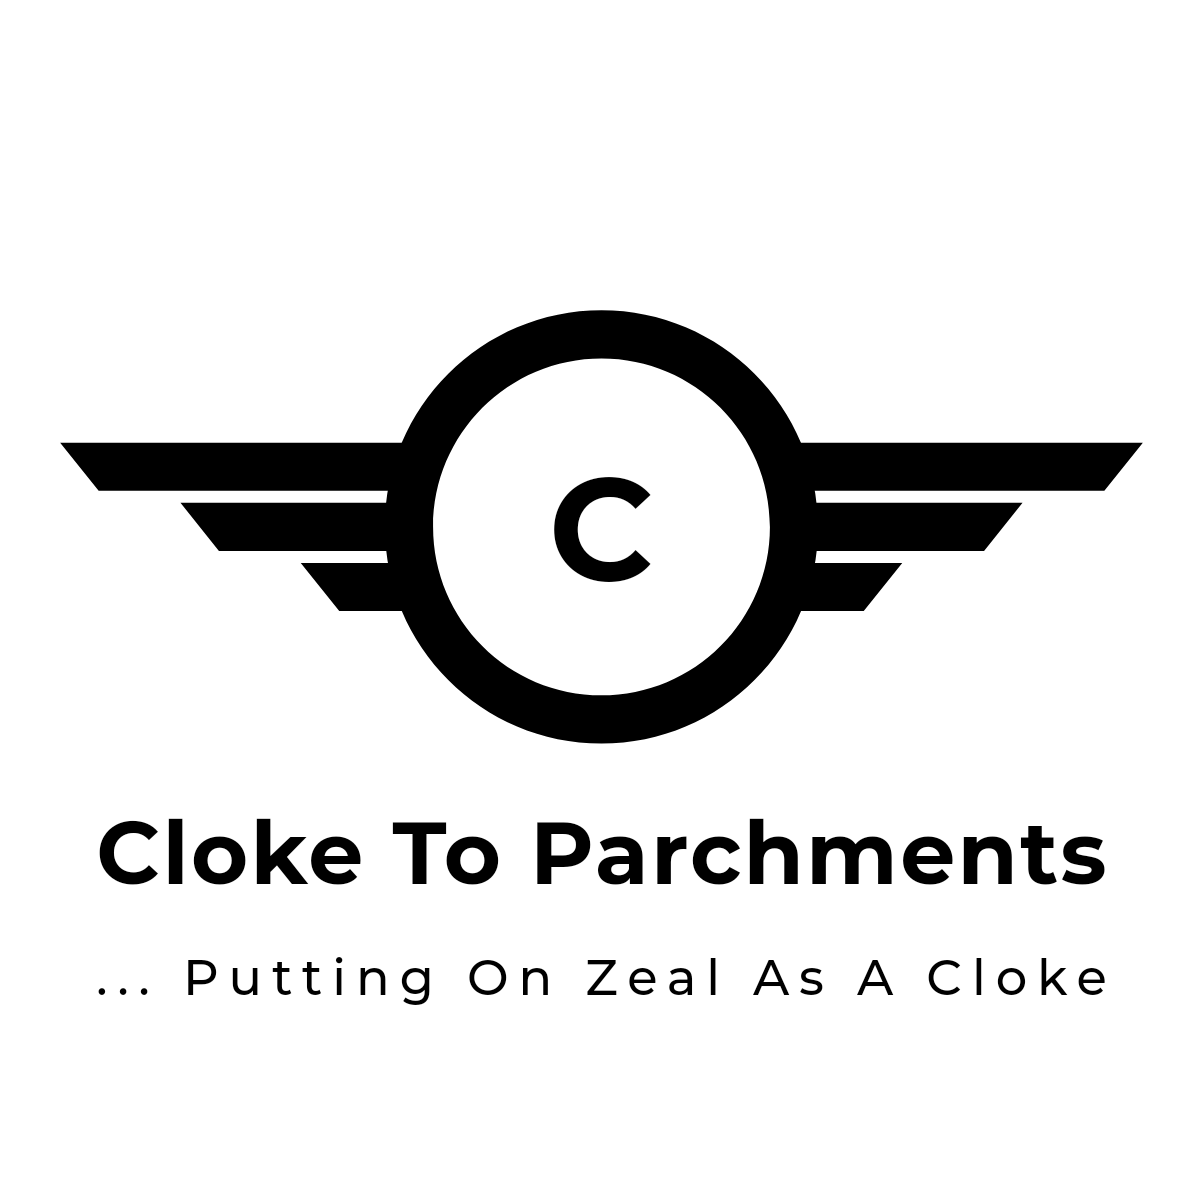 Cloke To Parchments